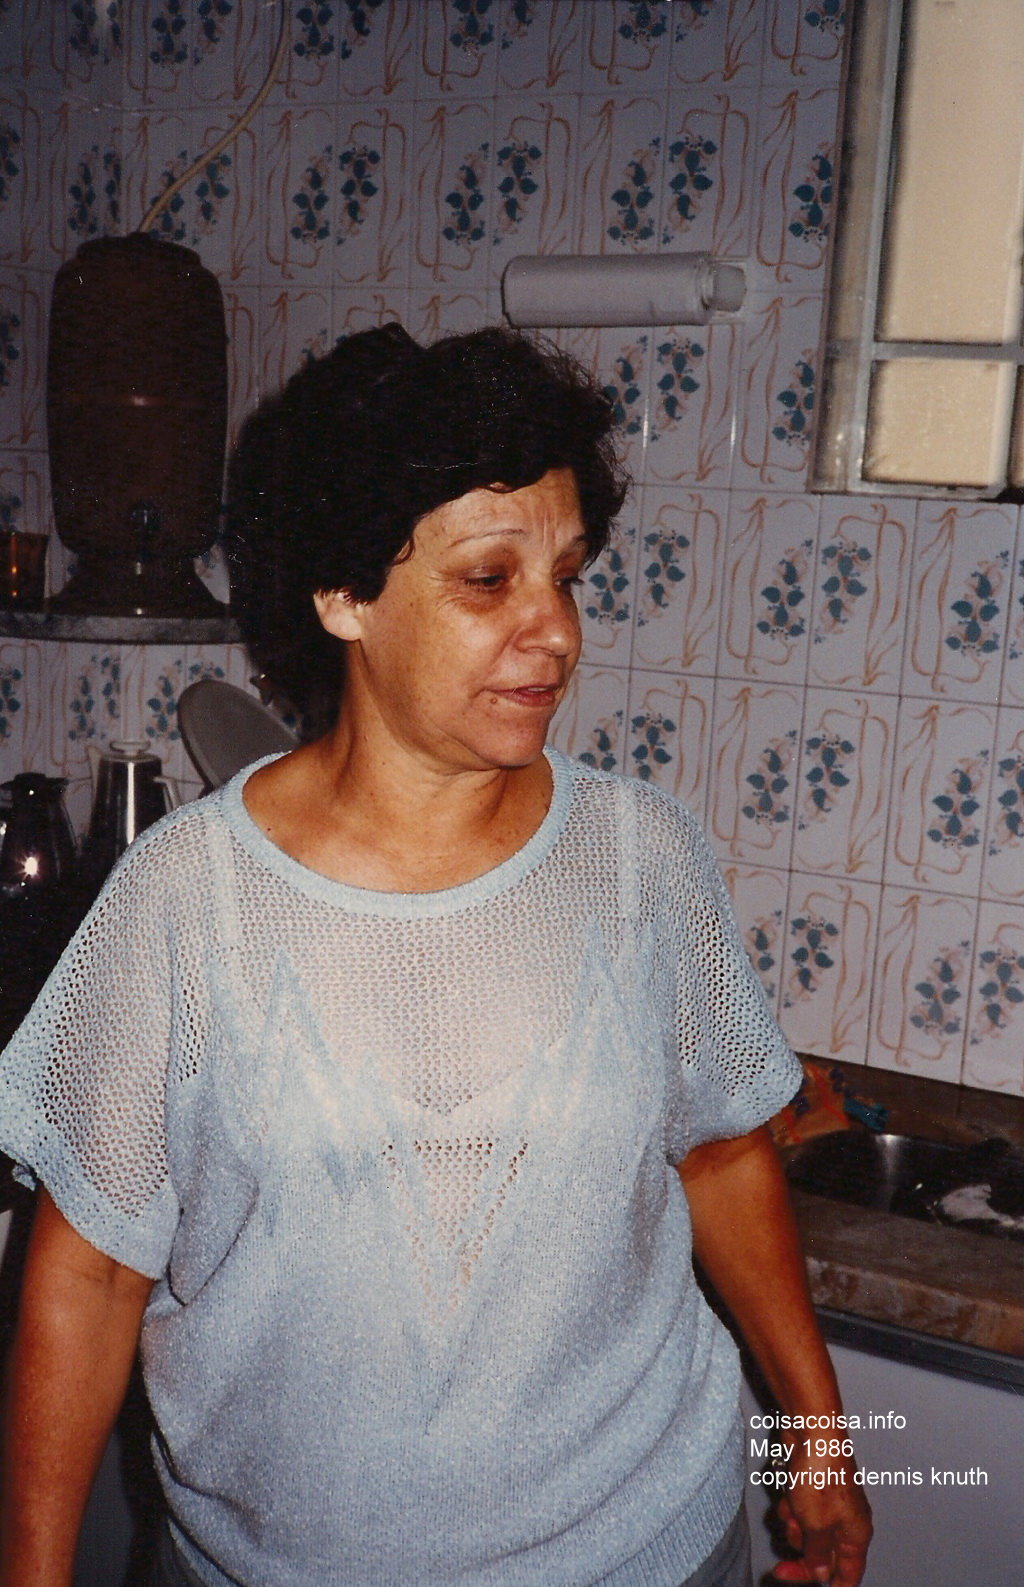 Vicentina in her kitchen